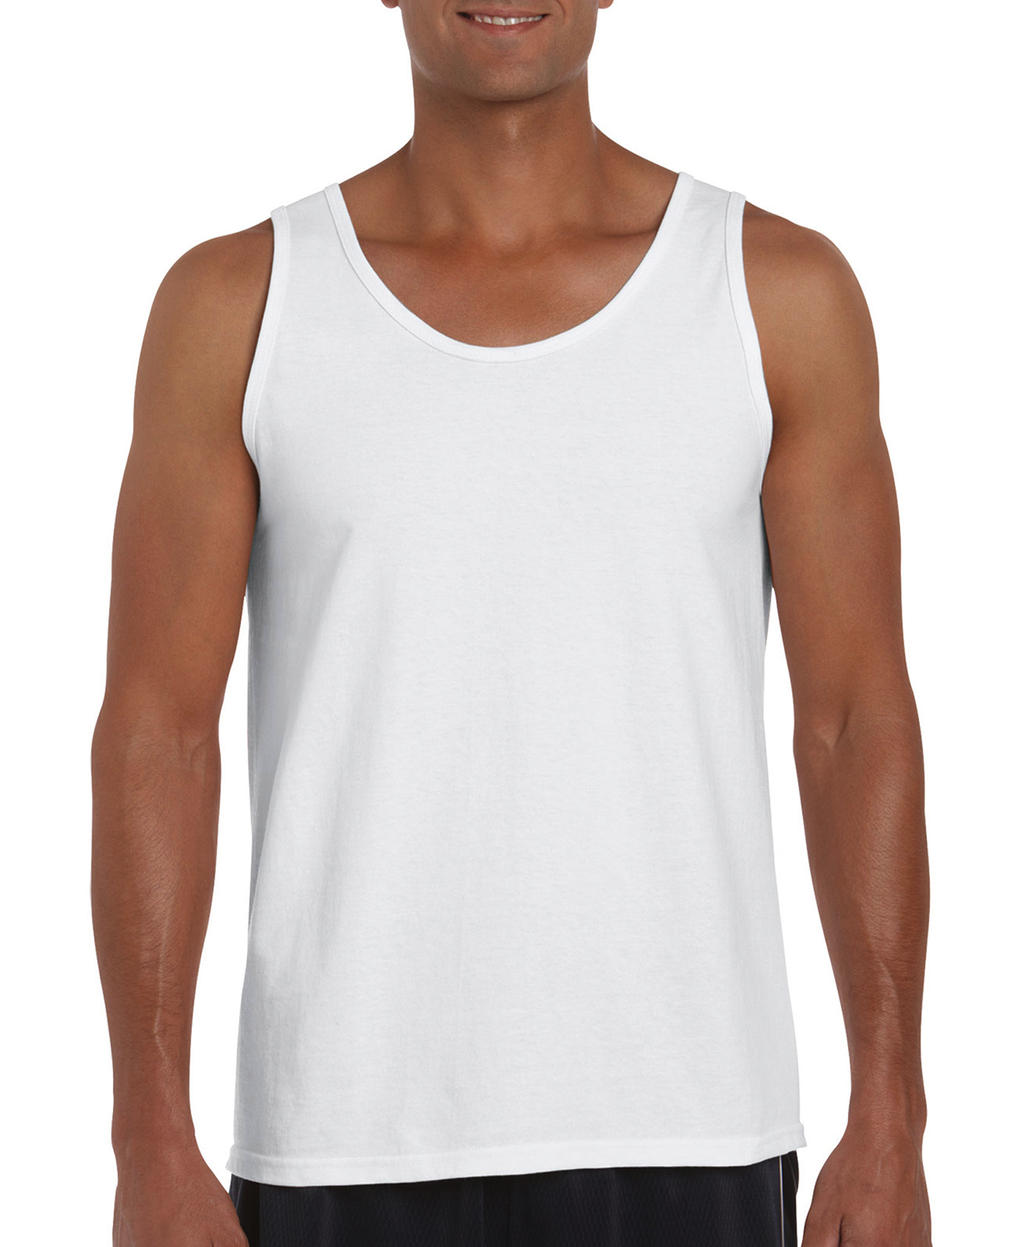 Gildan - camiseta atleta hombre - 64200